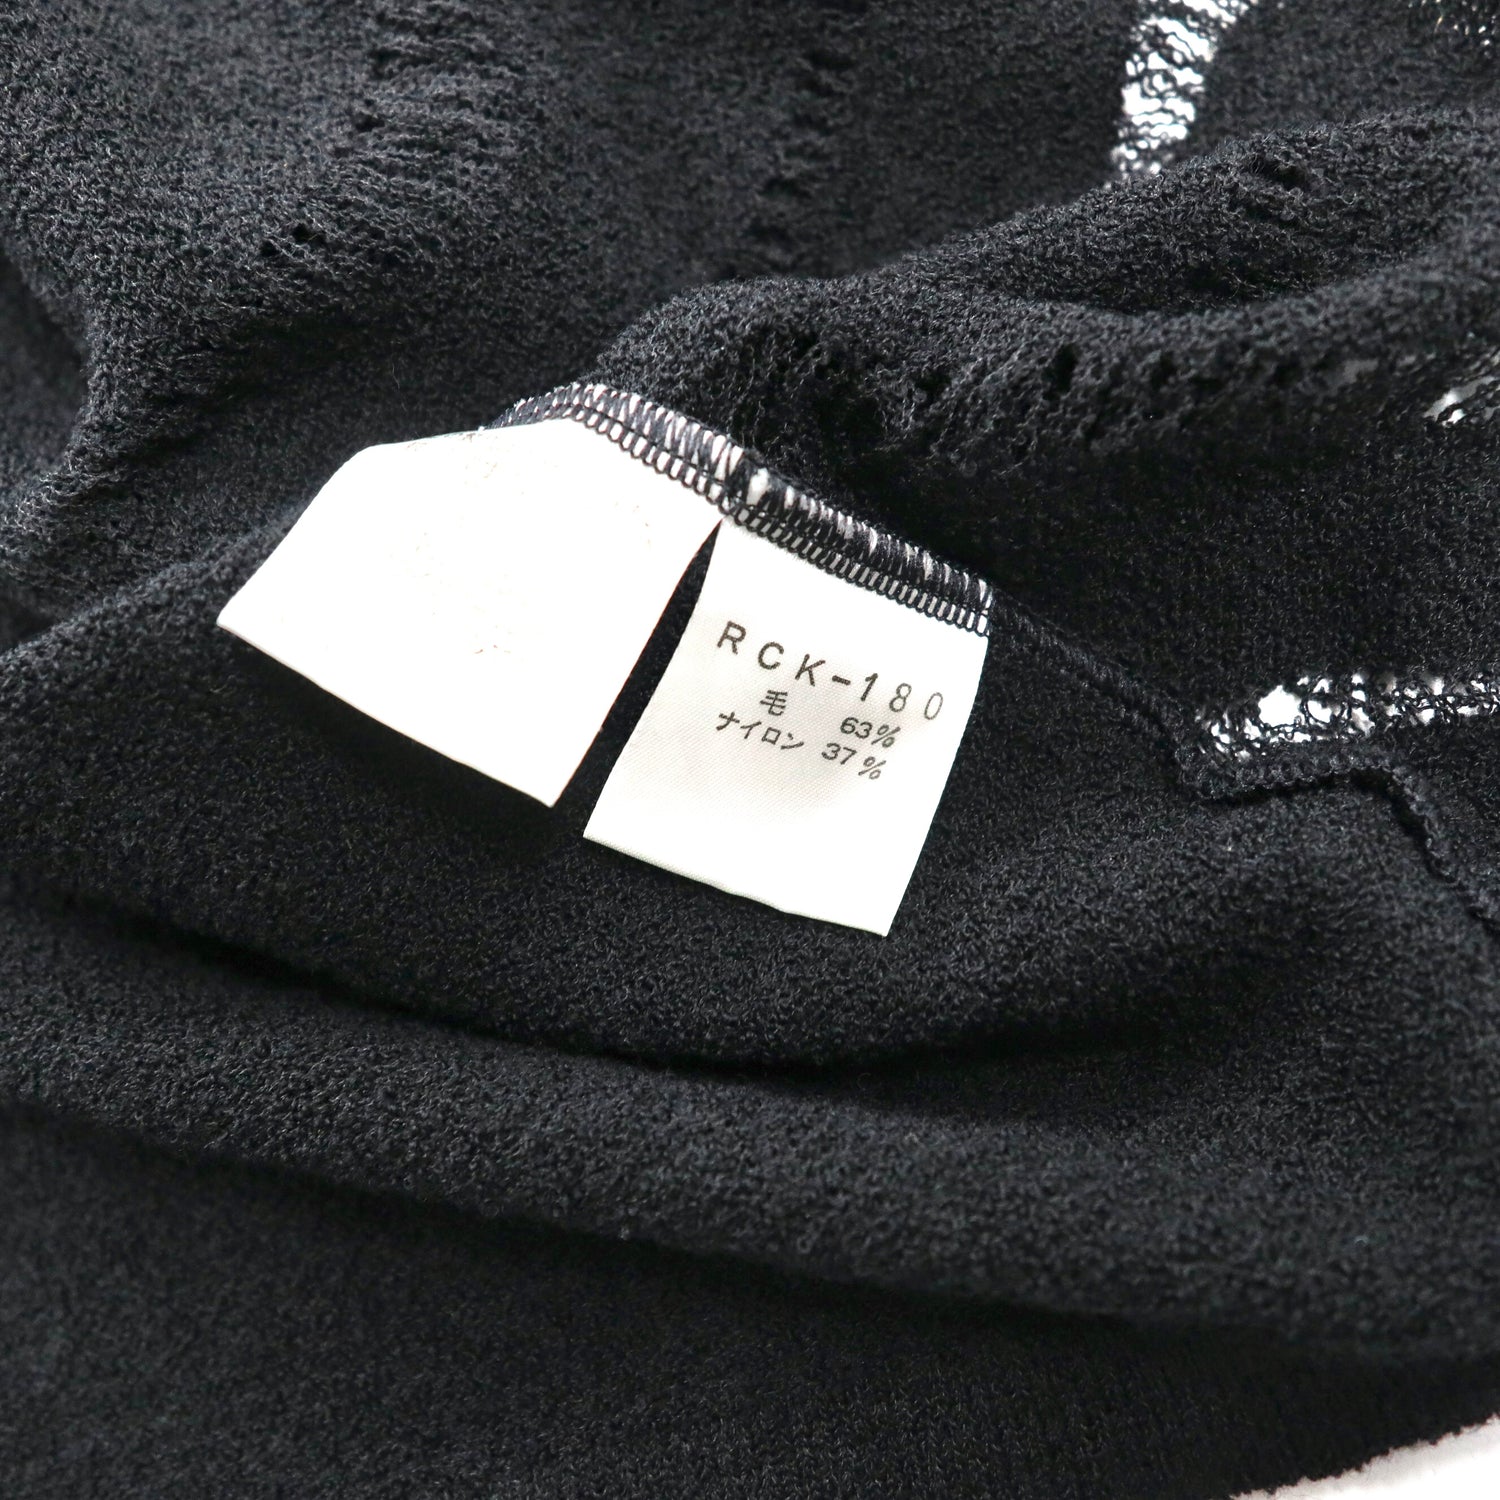 FICCE YOSHIYUKI KONISHI Design Knit Sweater L Black Wool 80s Japan